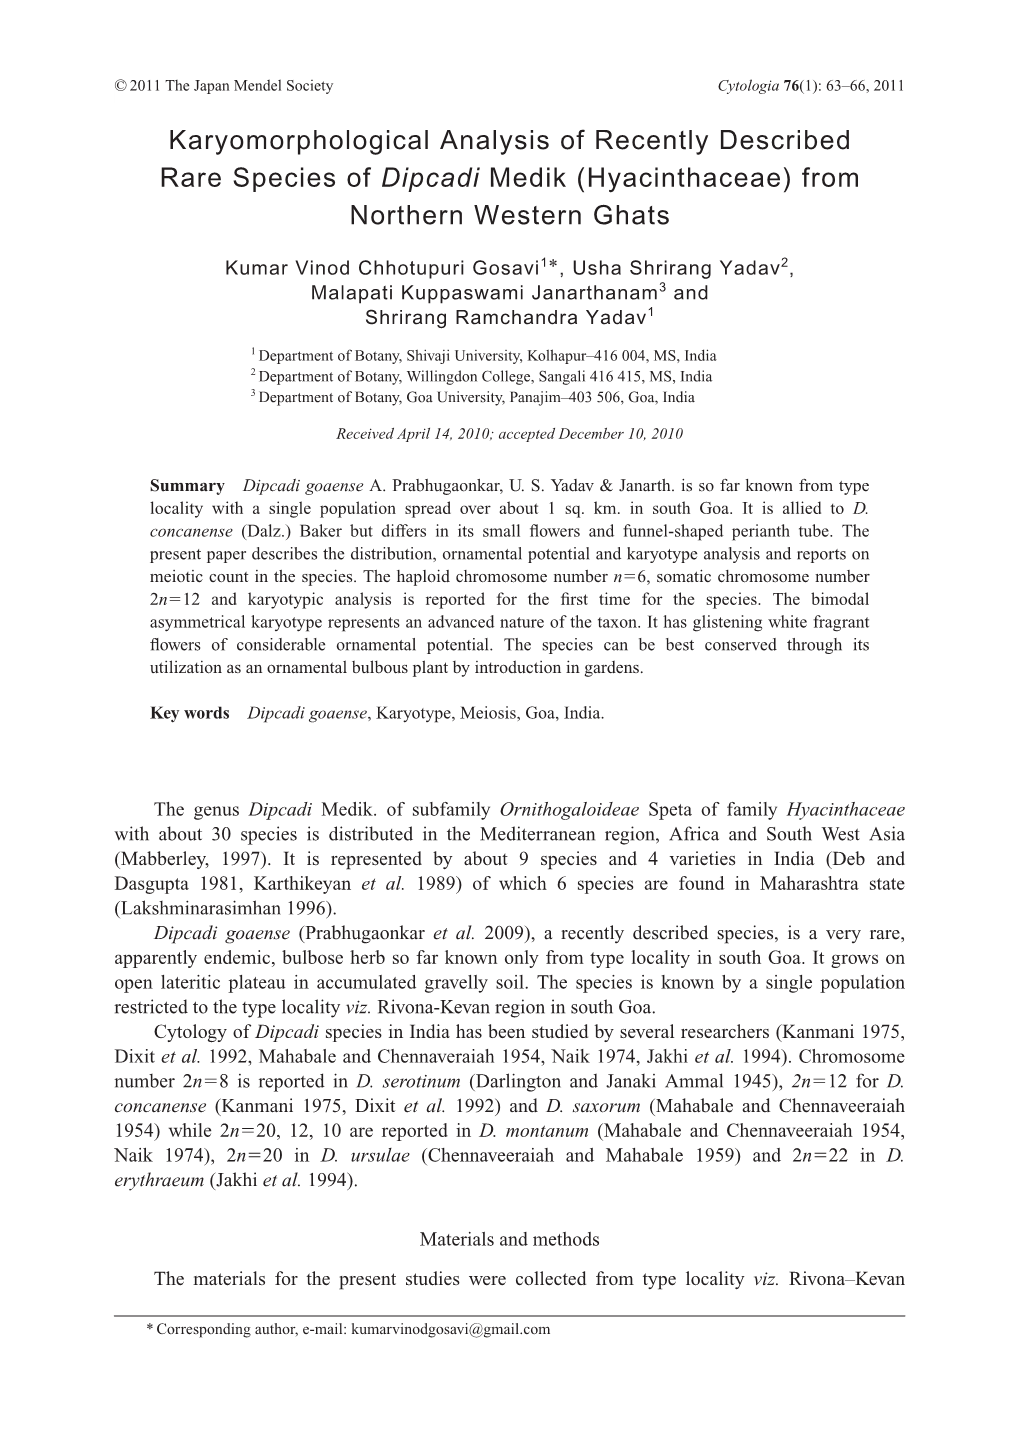 Karyomorphological Analysis of Recently Described Rare Species of Dipcadi Medik (Hyacinthaceae) from Northern Western Ghats